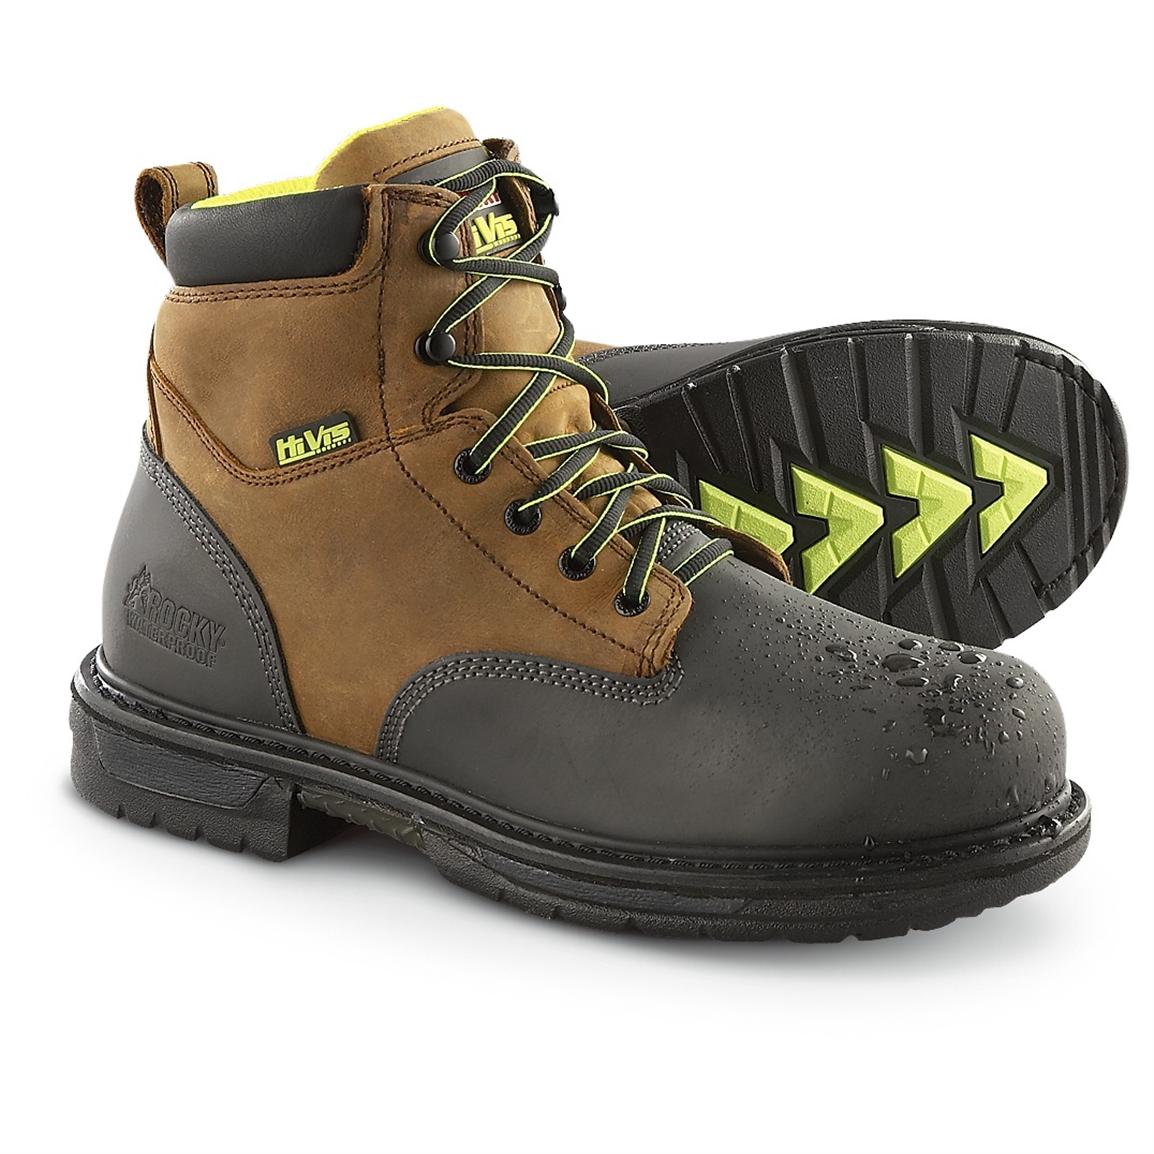 Work Boots For Men Waterproof - Yu Boots